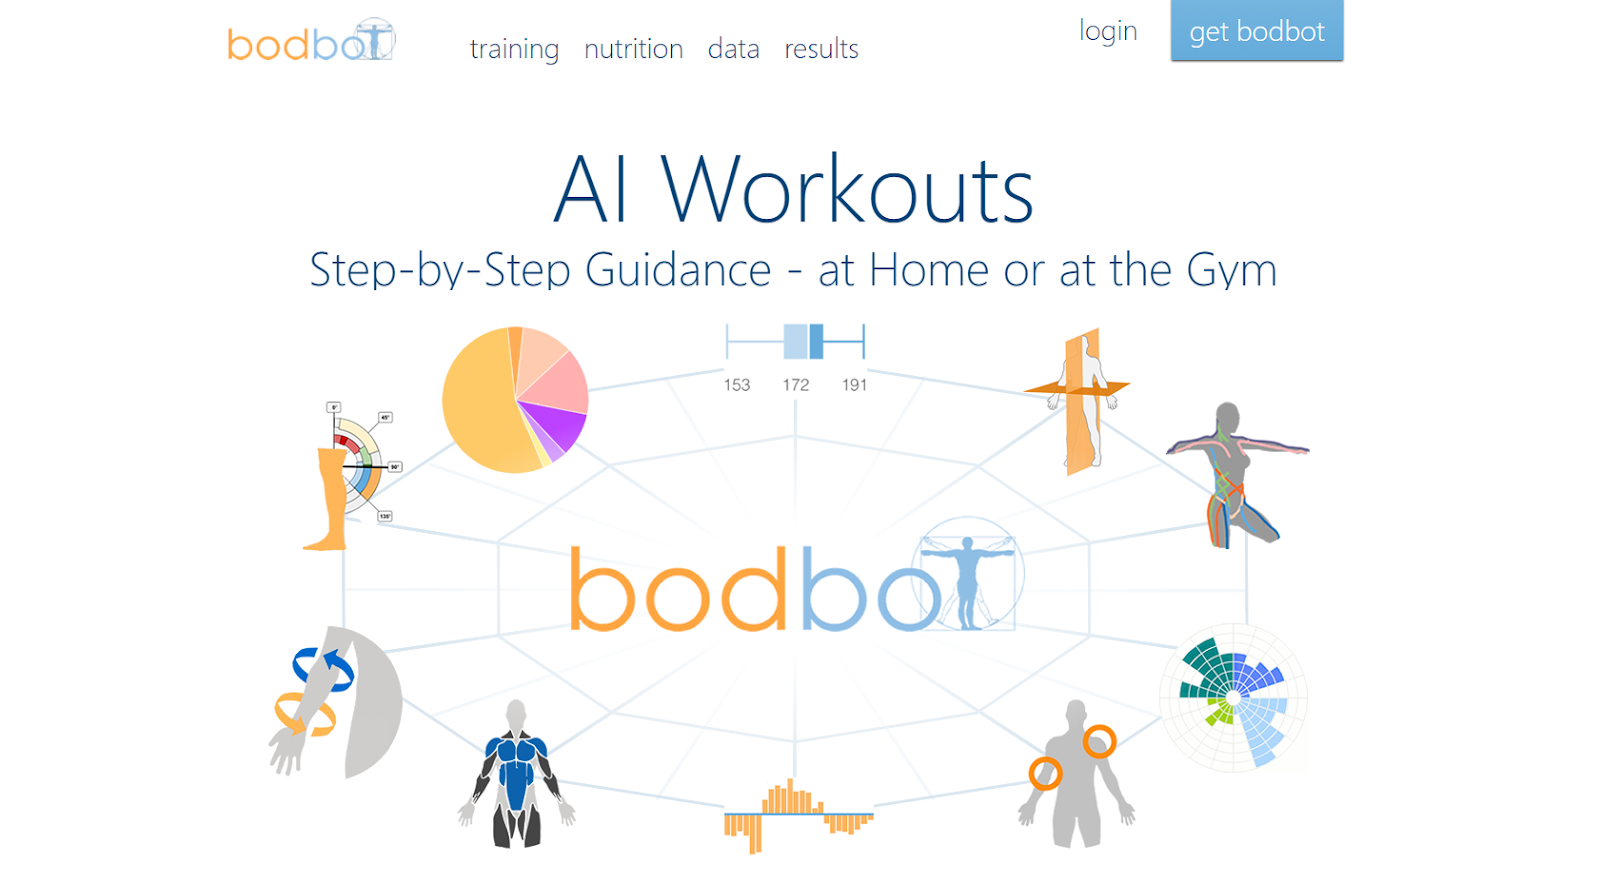 bodbot website - ai workouts